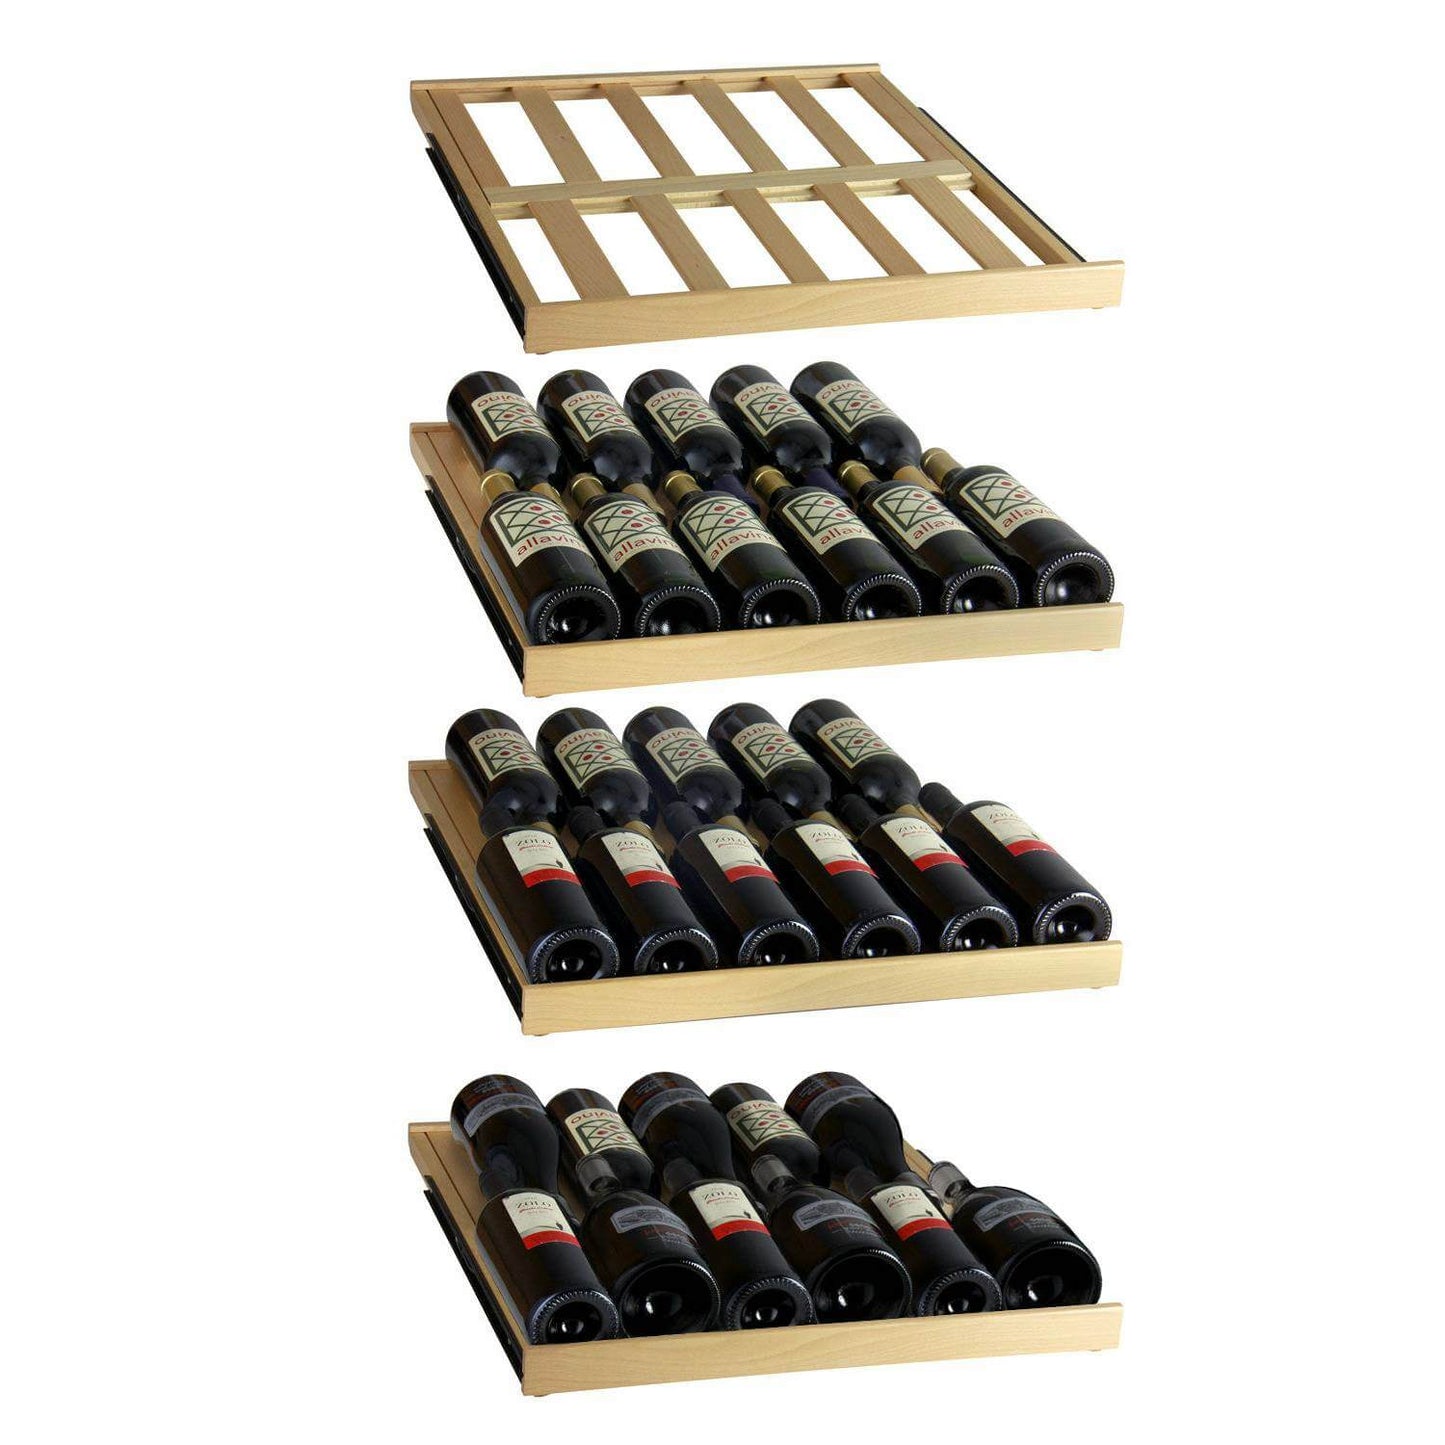 Allavino 48" Wide FlexCount Classic II Tru-Vino 348 Bottle Dual Zone Stainless Steel Side-by-Side Wine Refrigerator